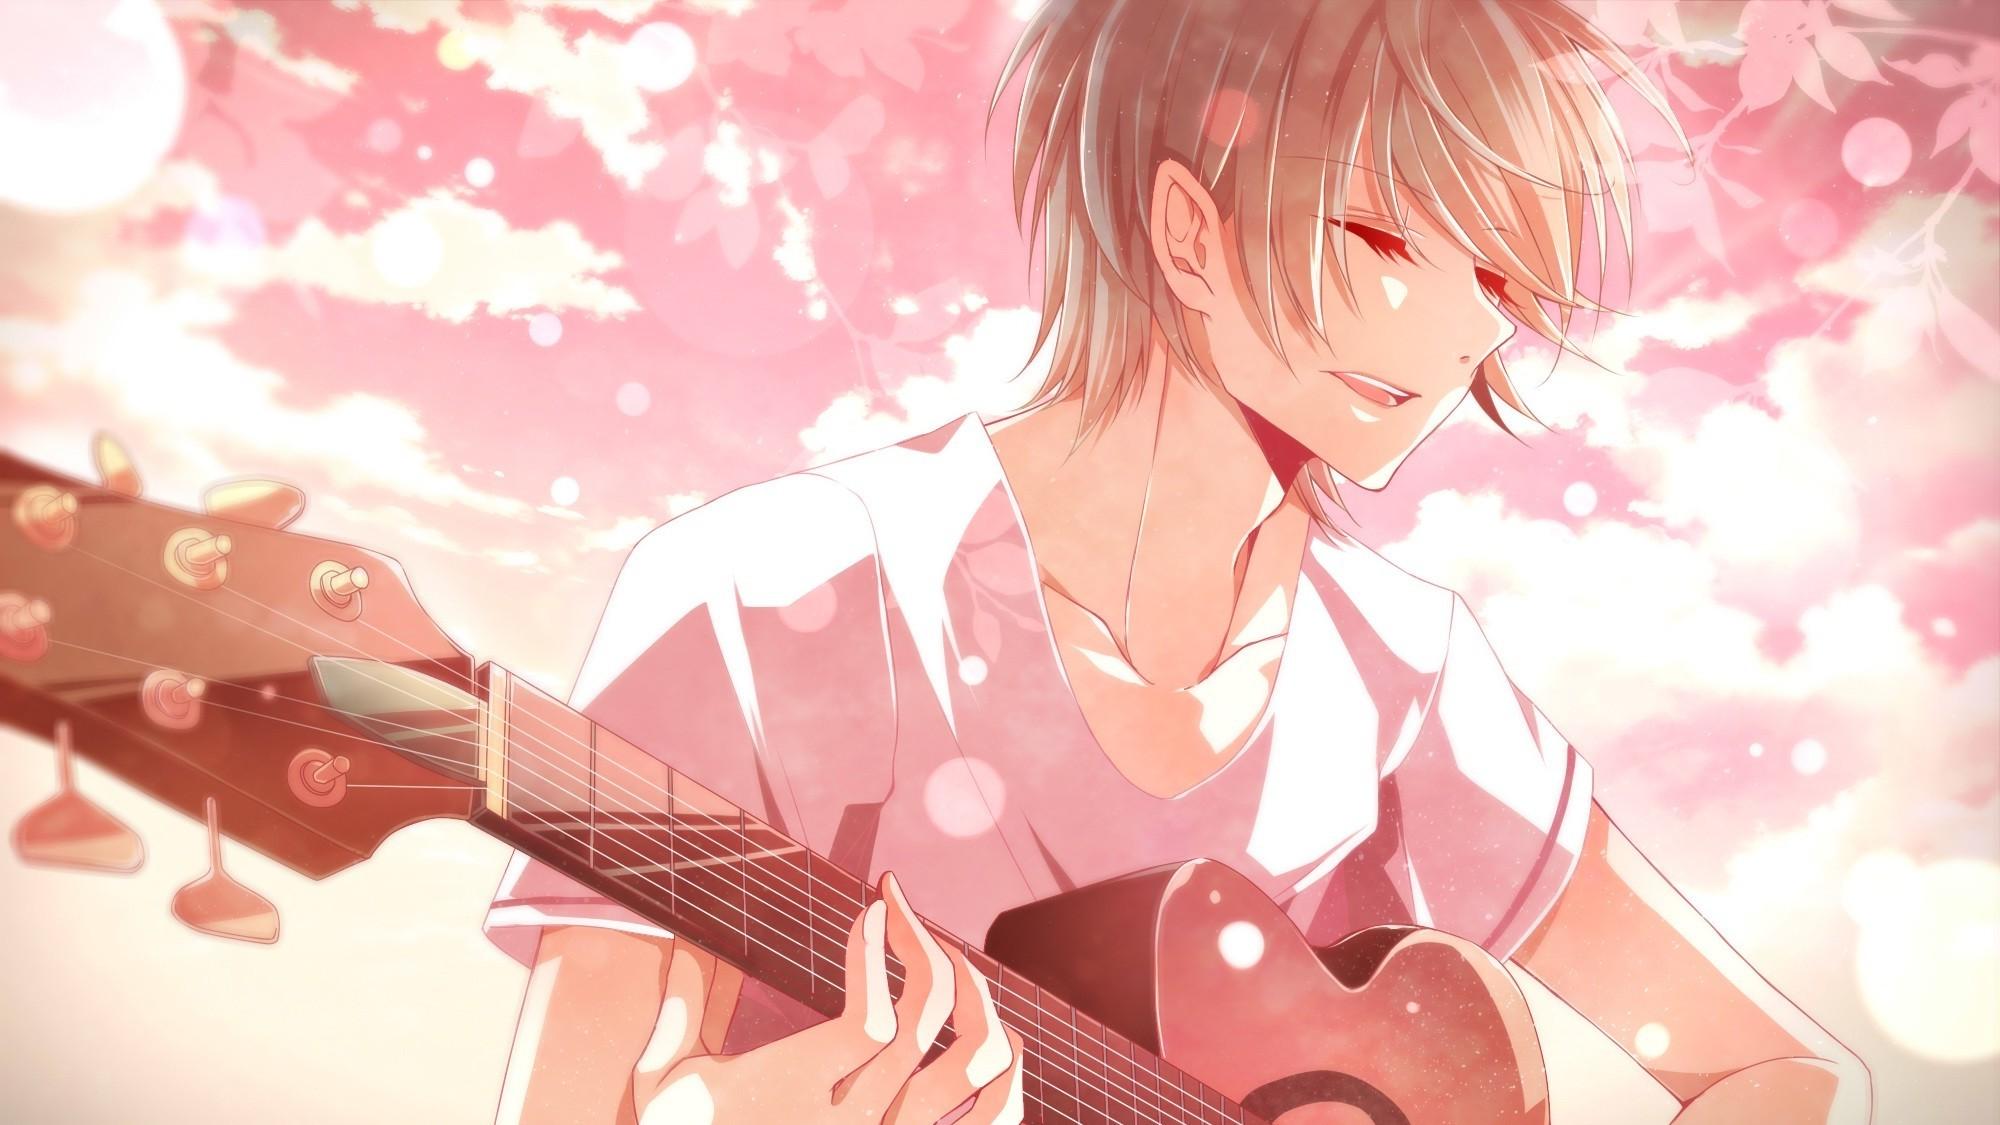 anime Boys, Guitar, Short Hair, Closed Eyes, Musical Instrument